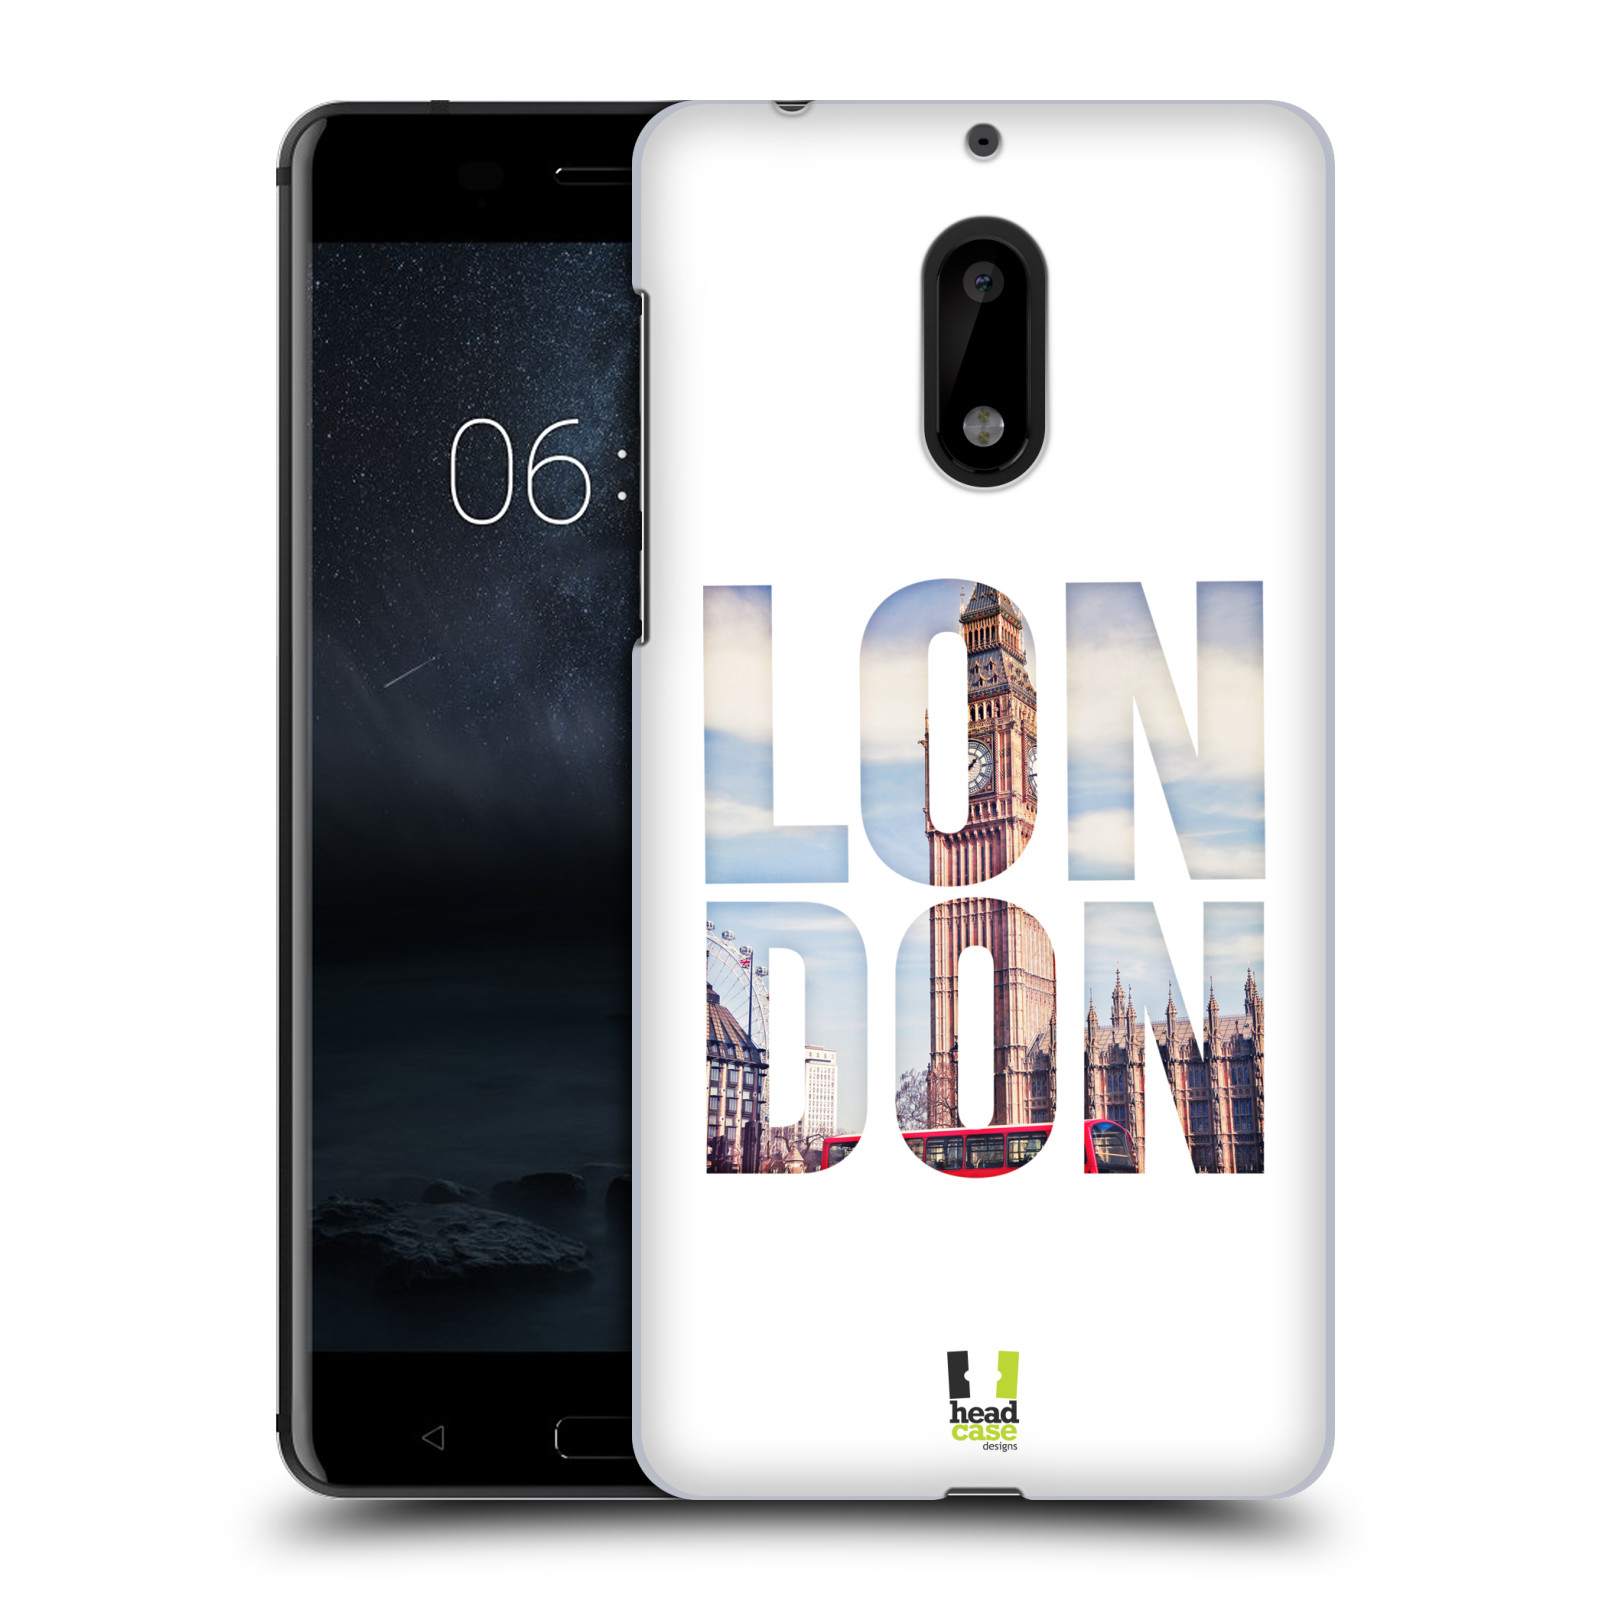 HEAD CASE plastový obal na mobil Nokia 6 vzor Města foto a nadpis ANGLIE, LONDÝN, BIG BEN